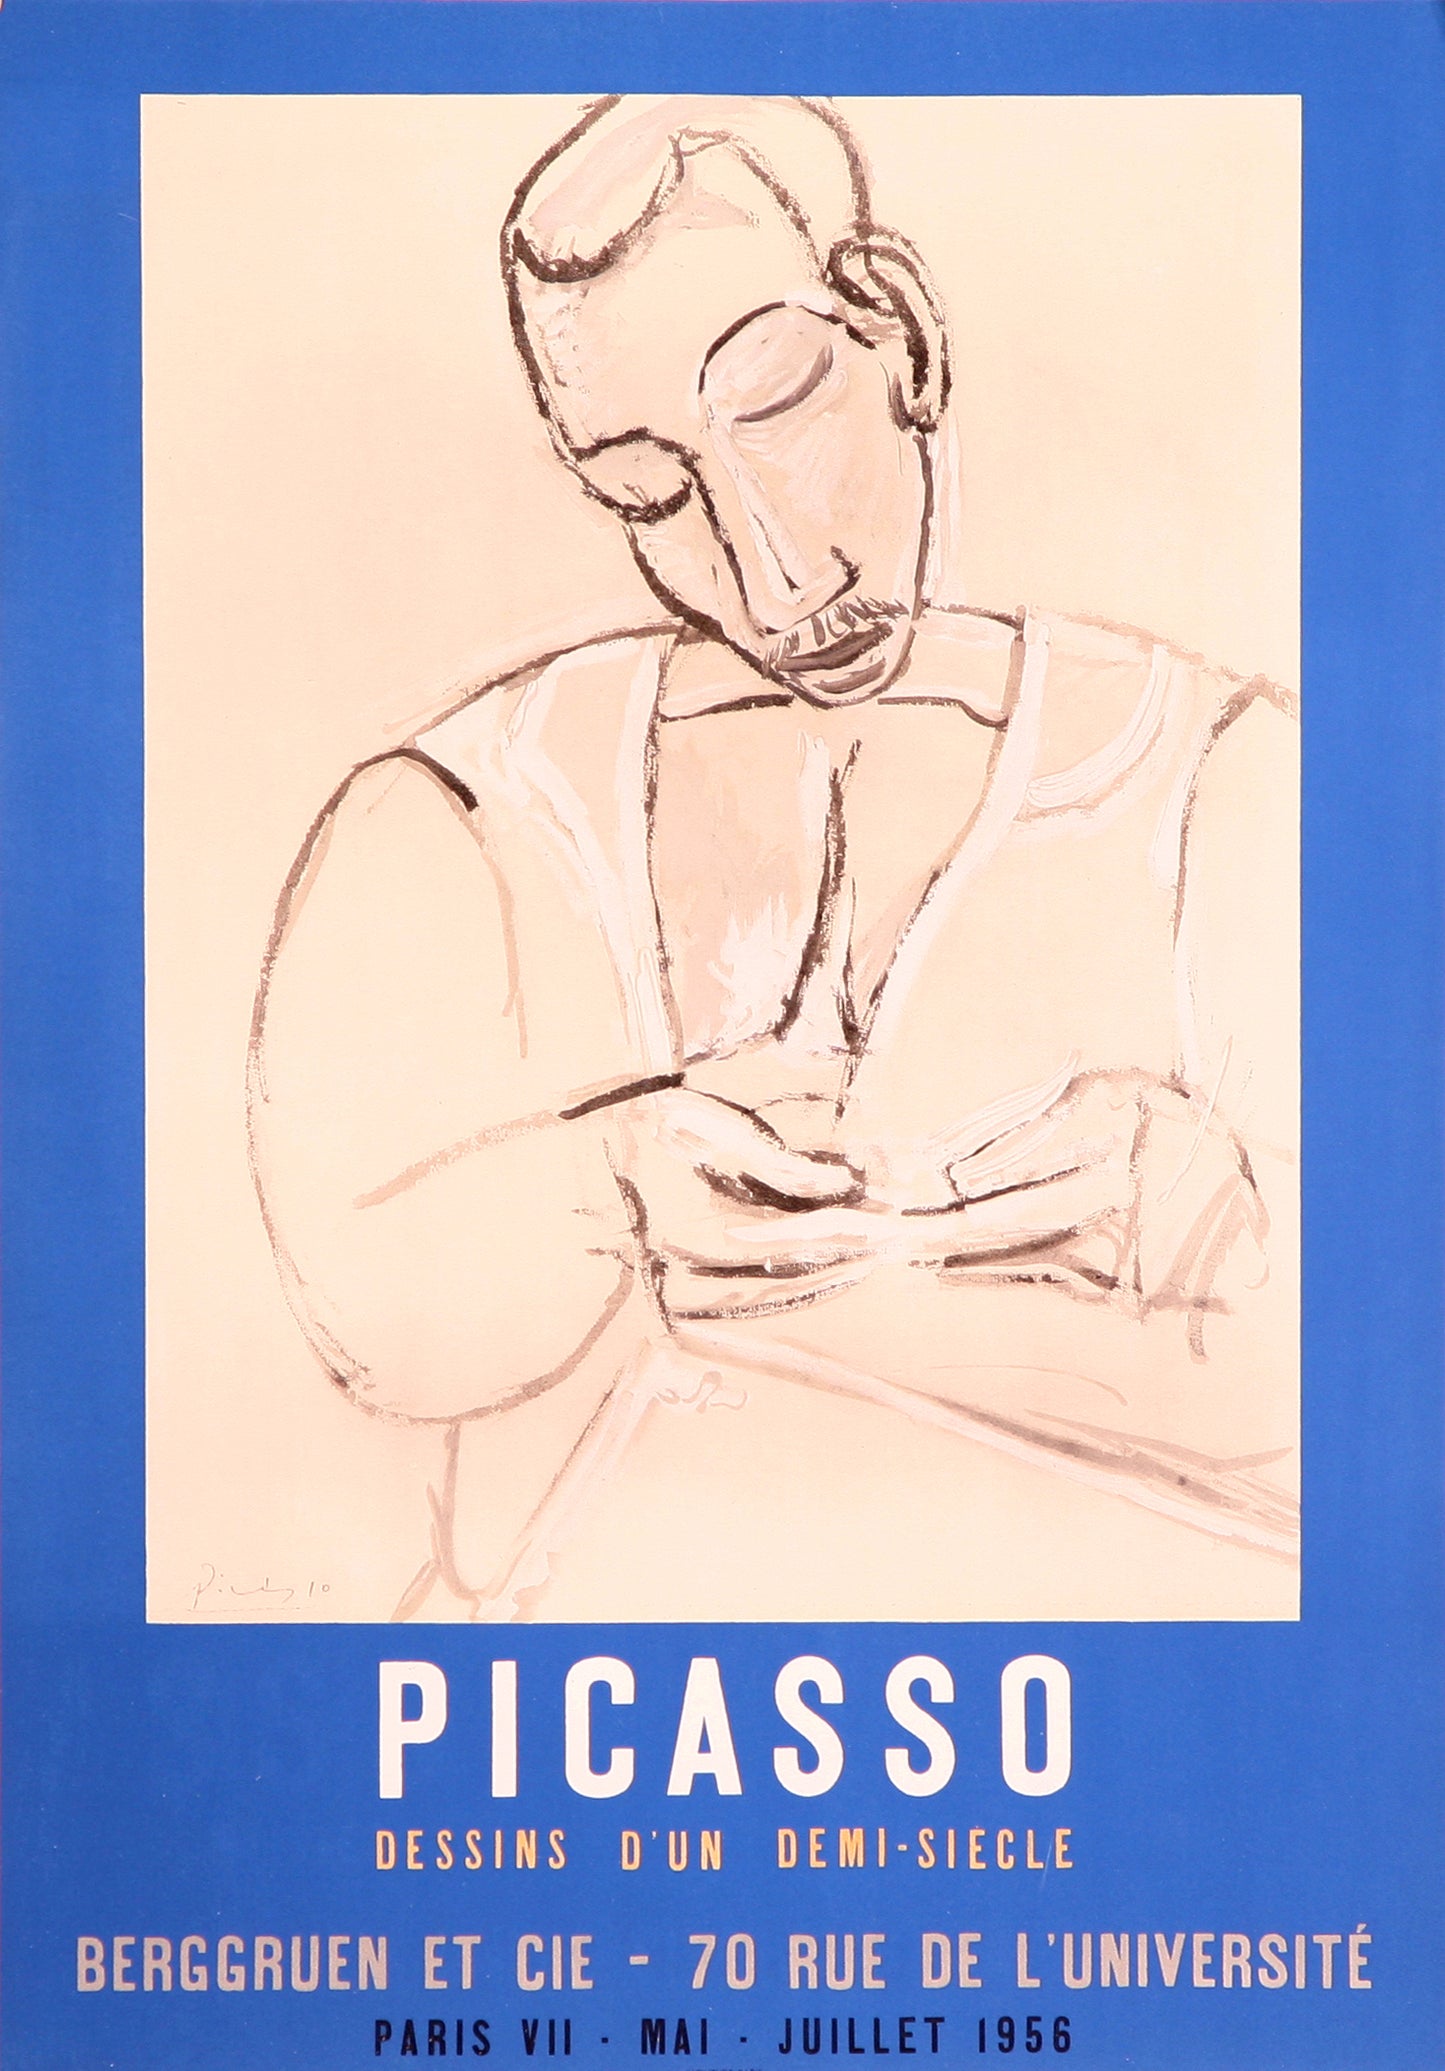 Dessins d'un Demi-Siecle - Berggruen and CIE (after) Picasso, 1956 - Mourlot Editions - Fine_Art - Poster - Lithograph - Wall Art - Vintage - Prints - Original